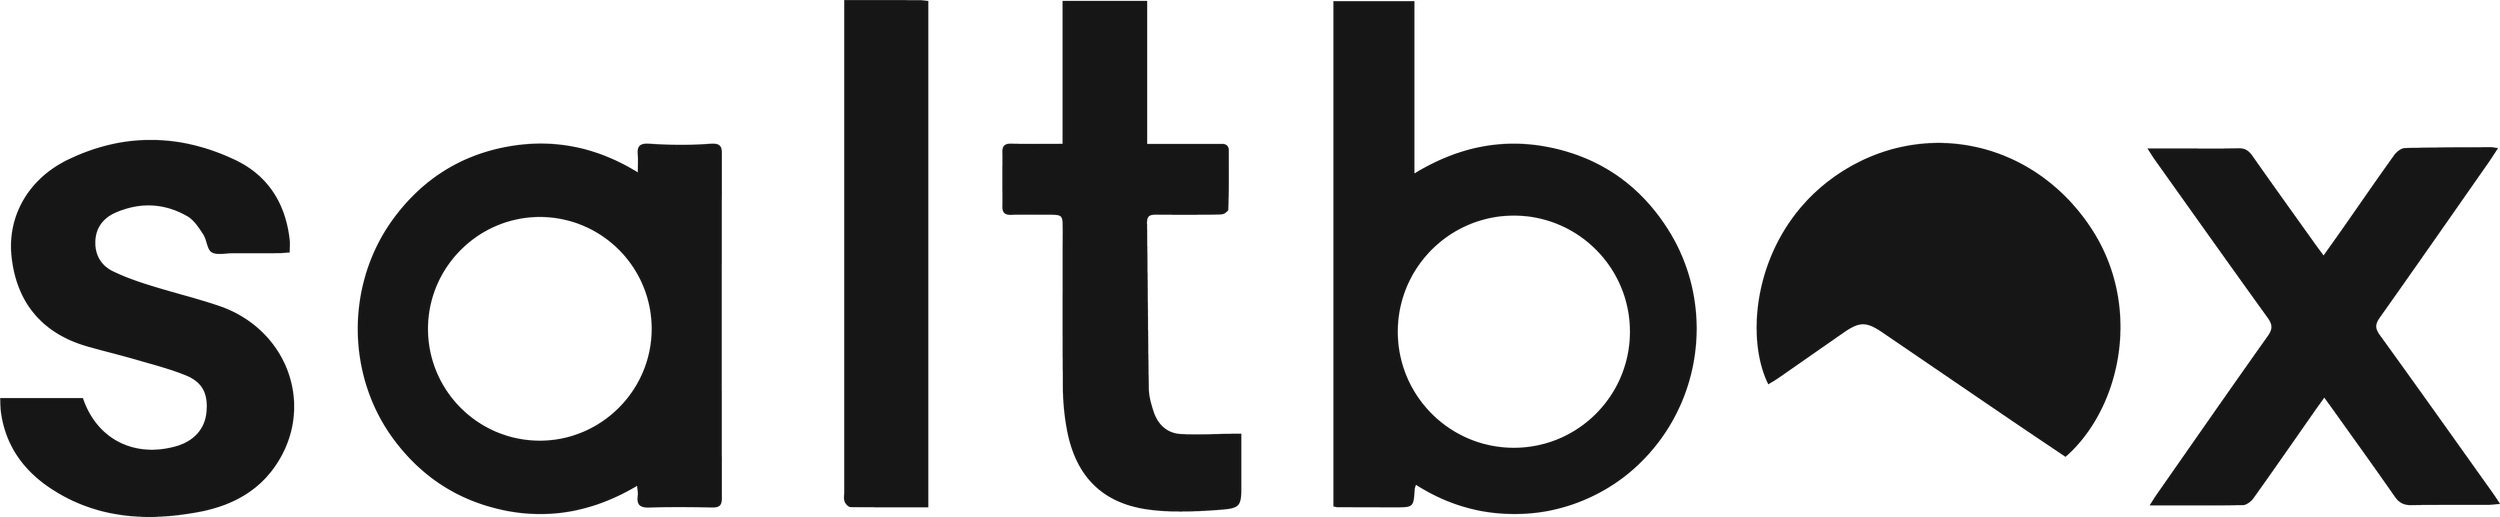 Saltbox+logo.jpg